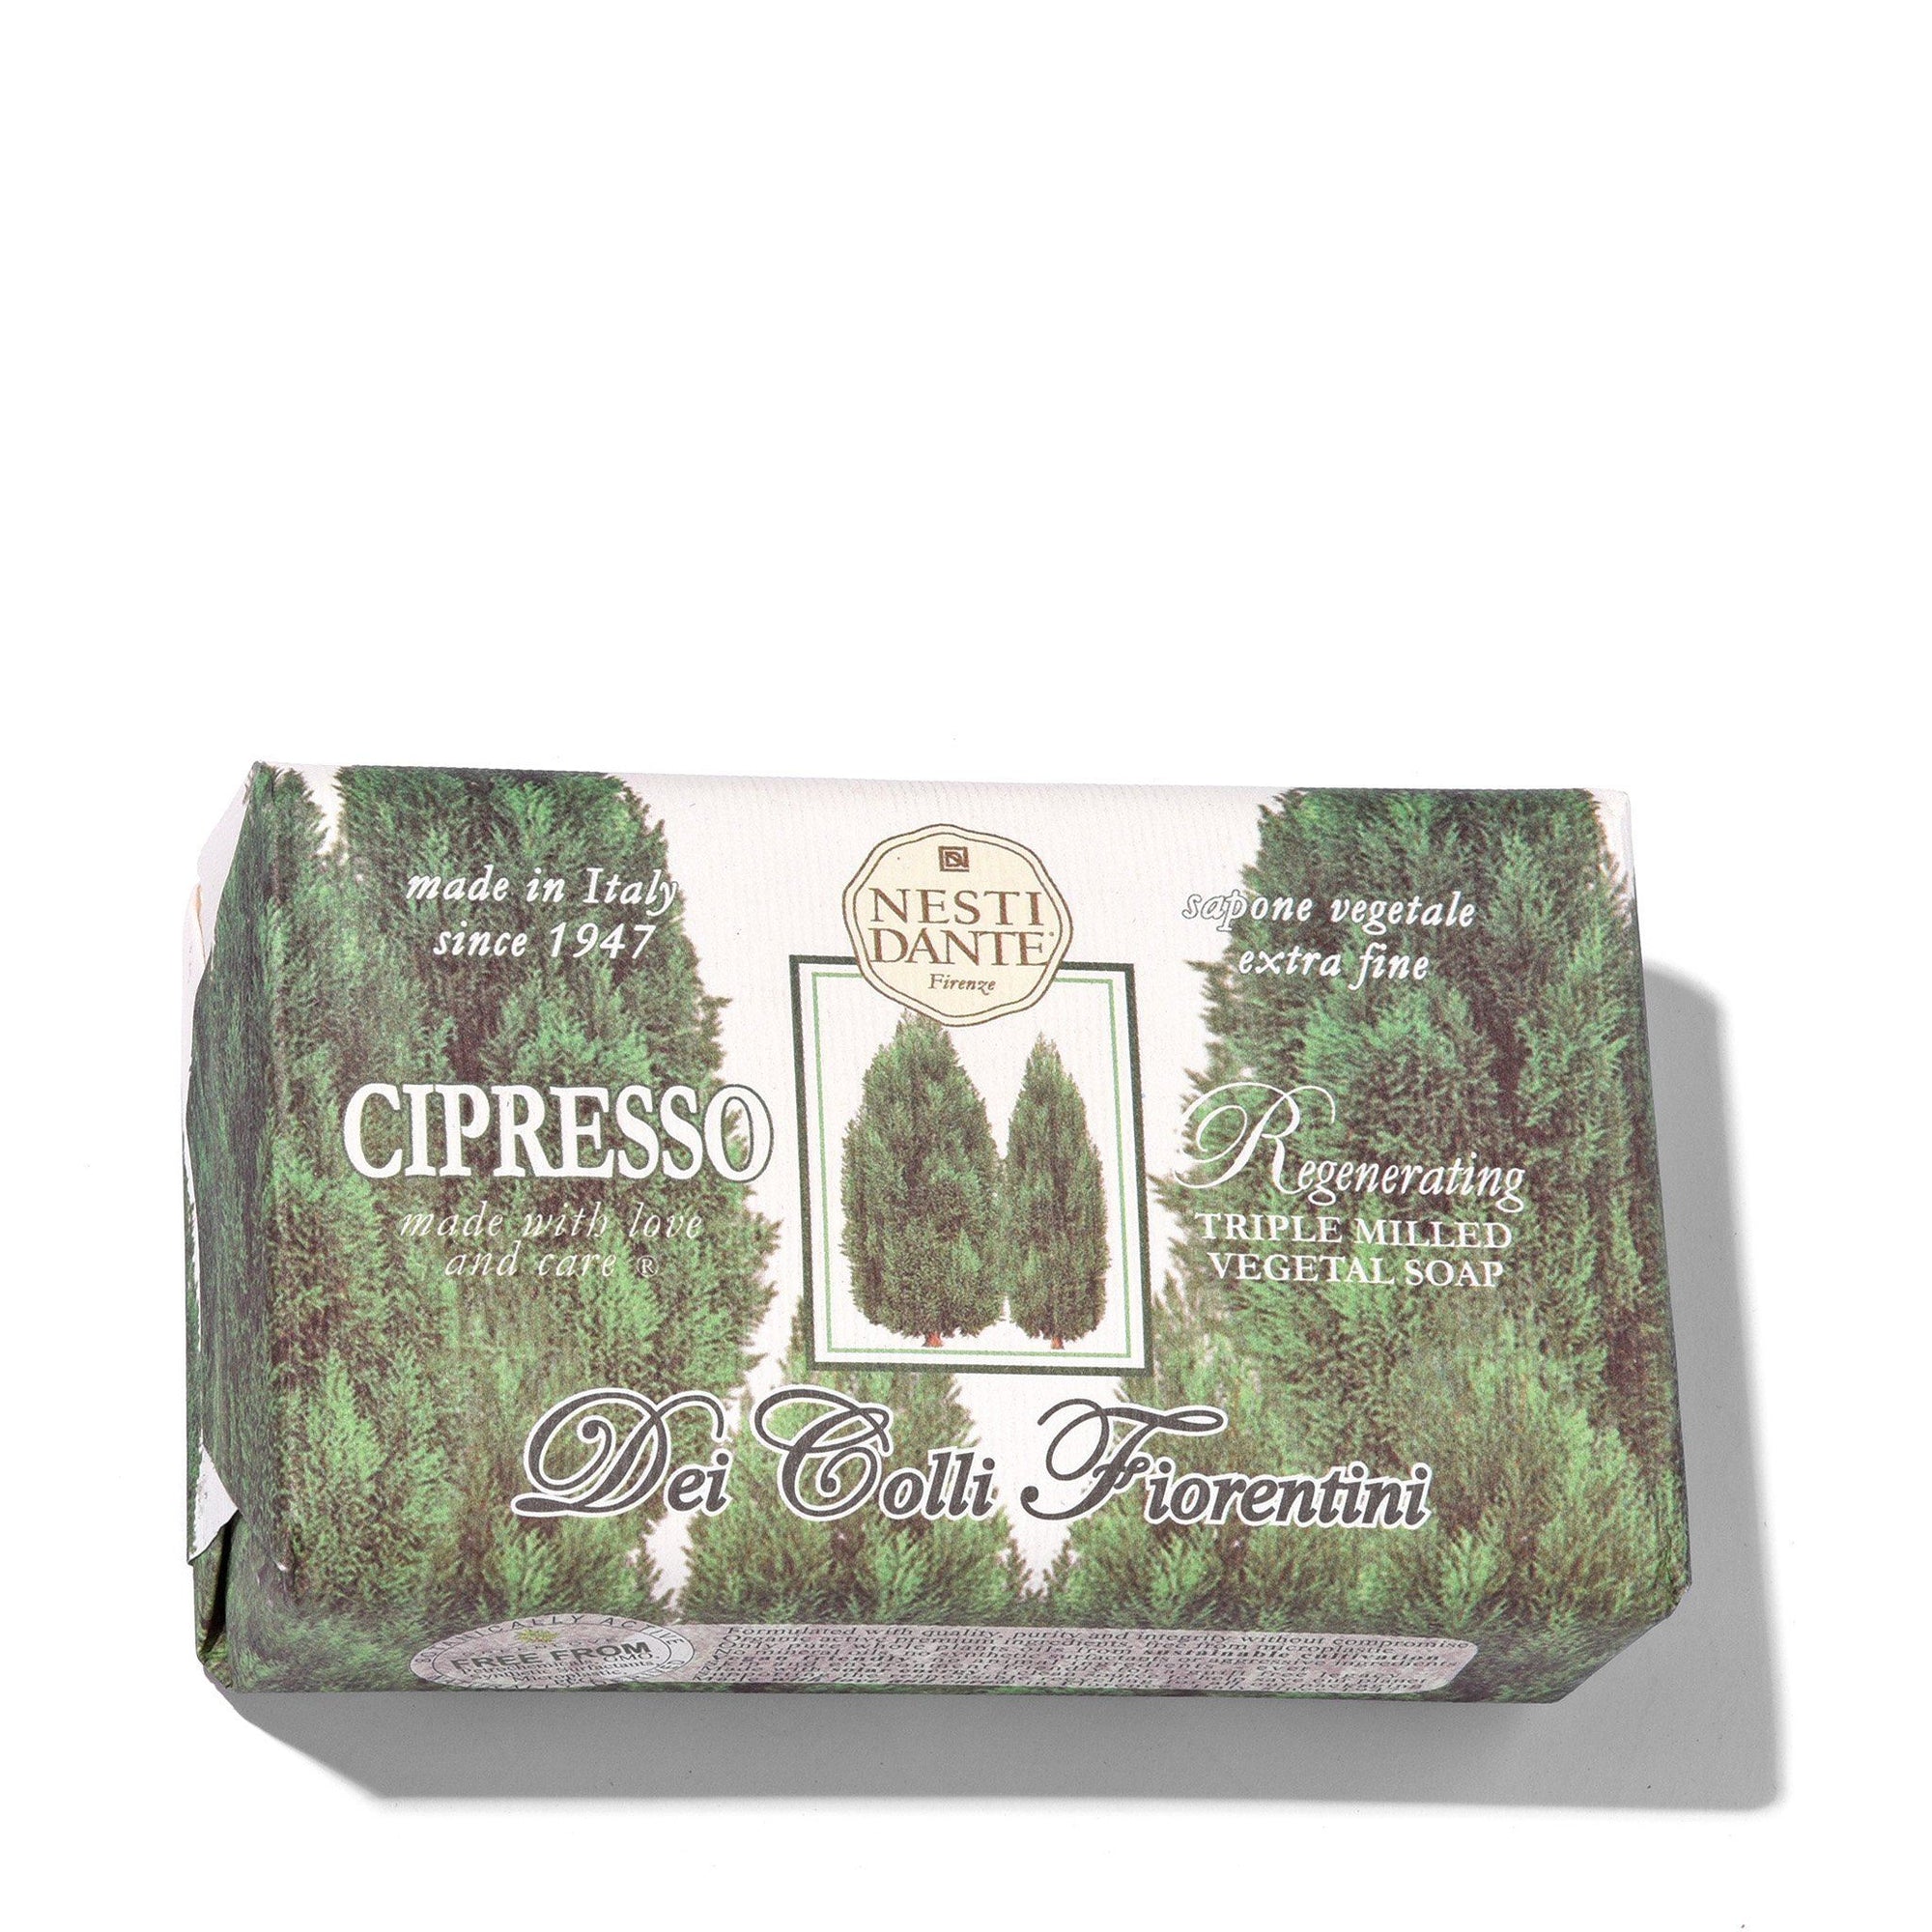 Nesti Dante Natural Italian Soap From Italy | Indigo Antiques